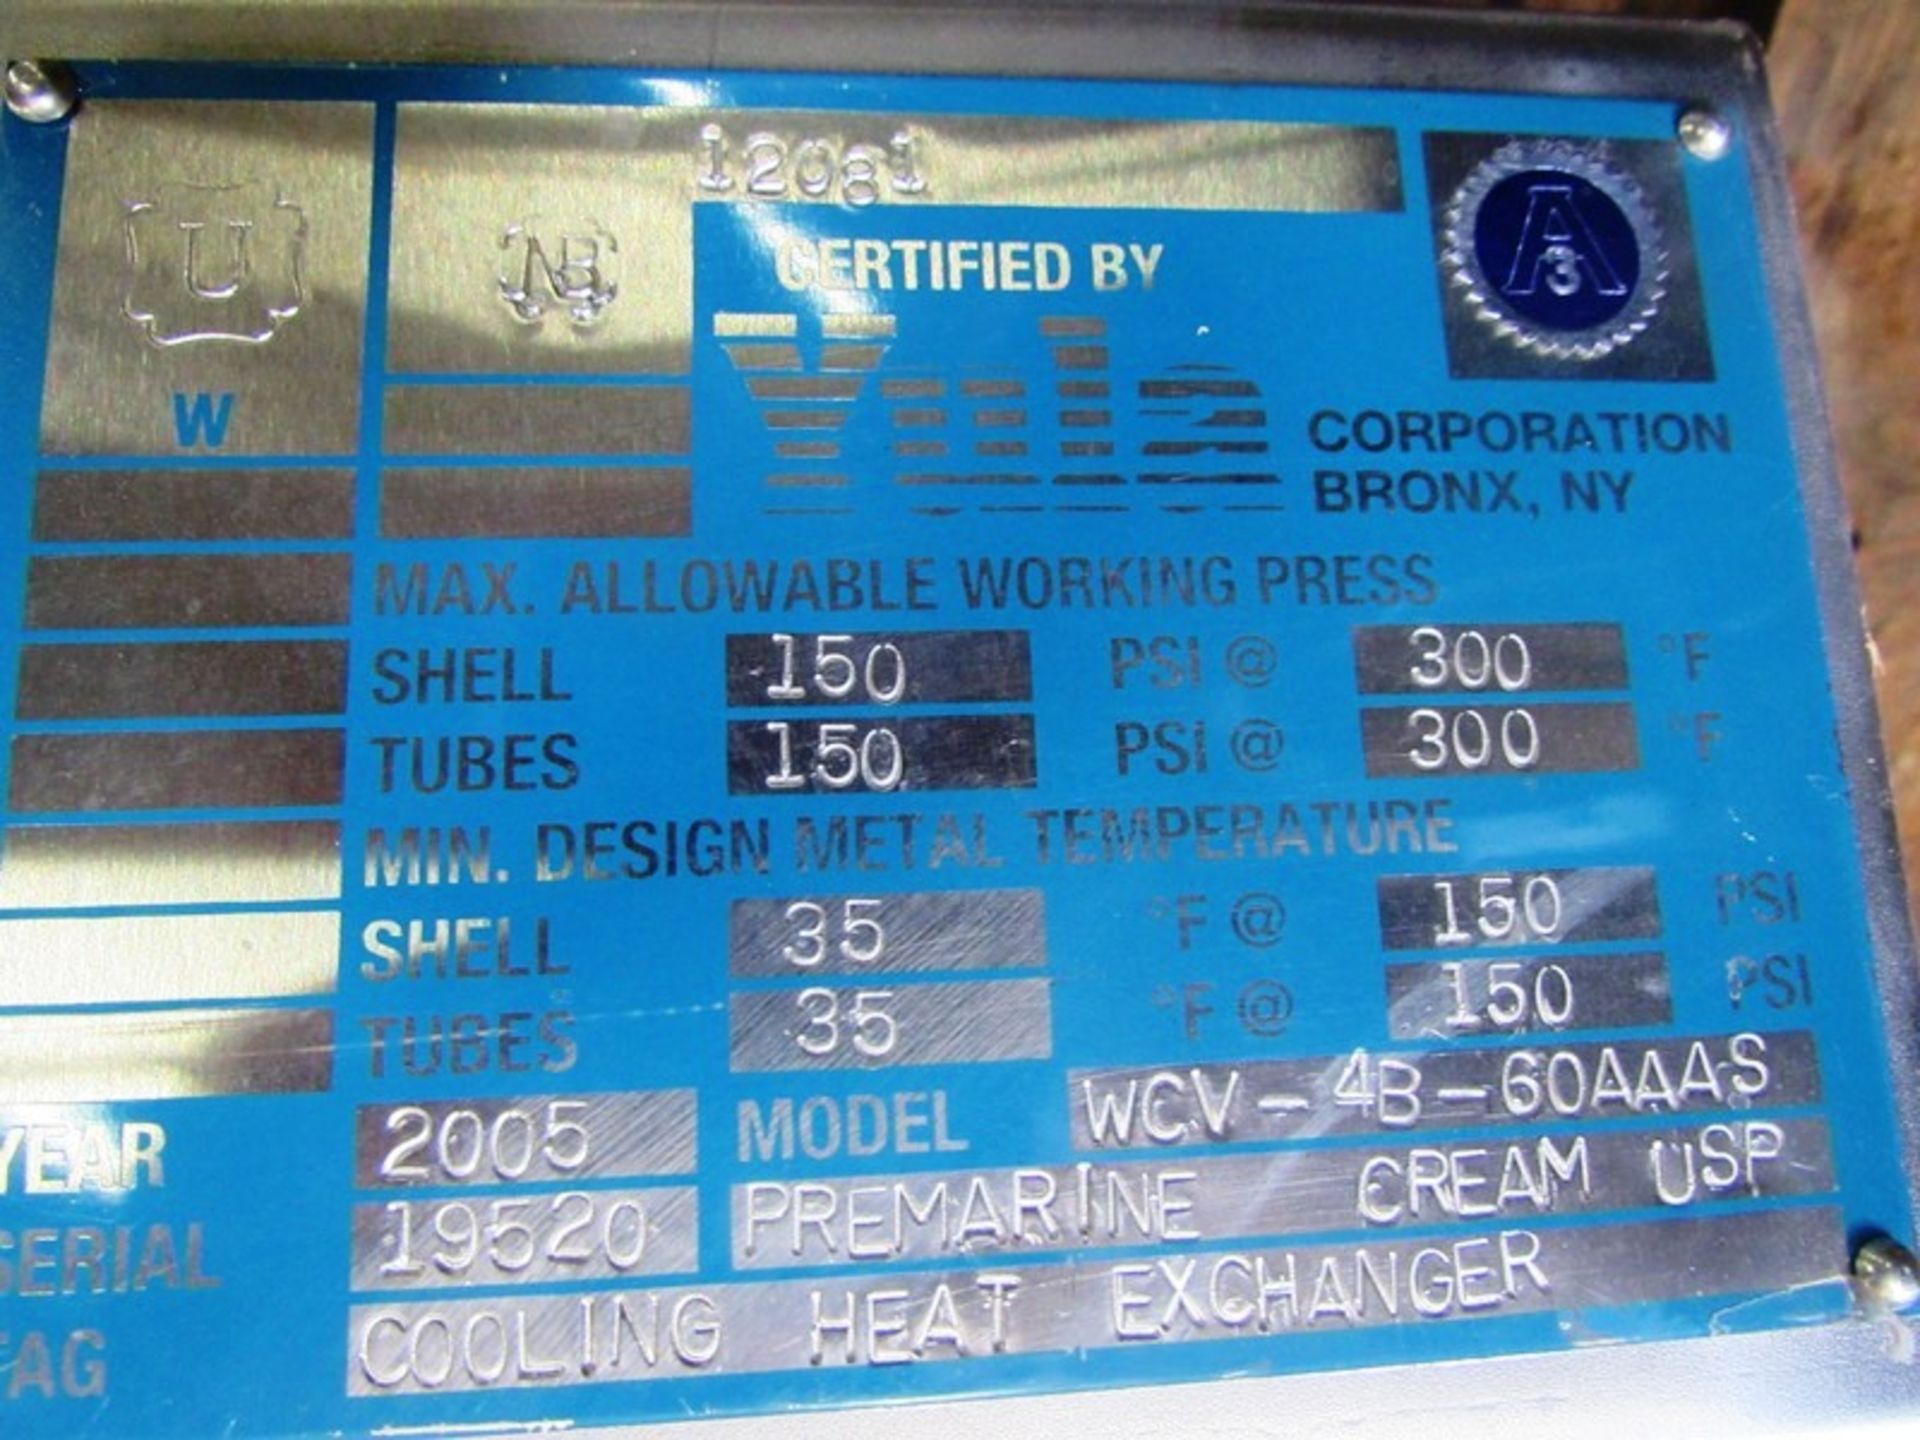 Yula Mdl. WCV-48-60AAAS Pre Marine Cream USP Cooling Heat Exchanger, Ser. #19520, Mfg. 2005, - Image 4 of 4